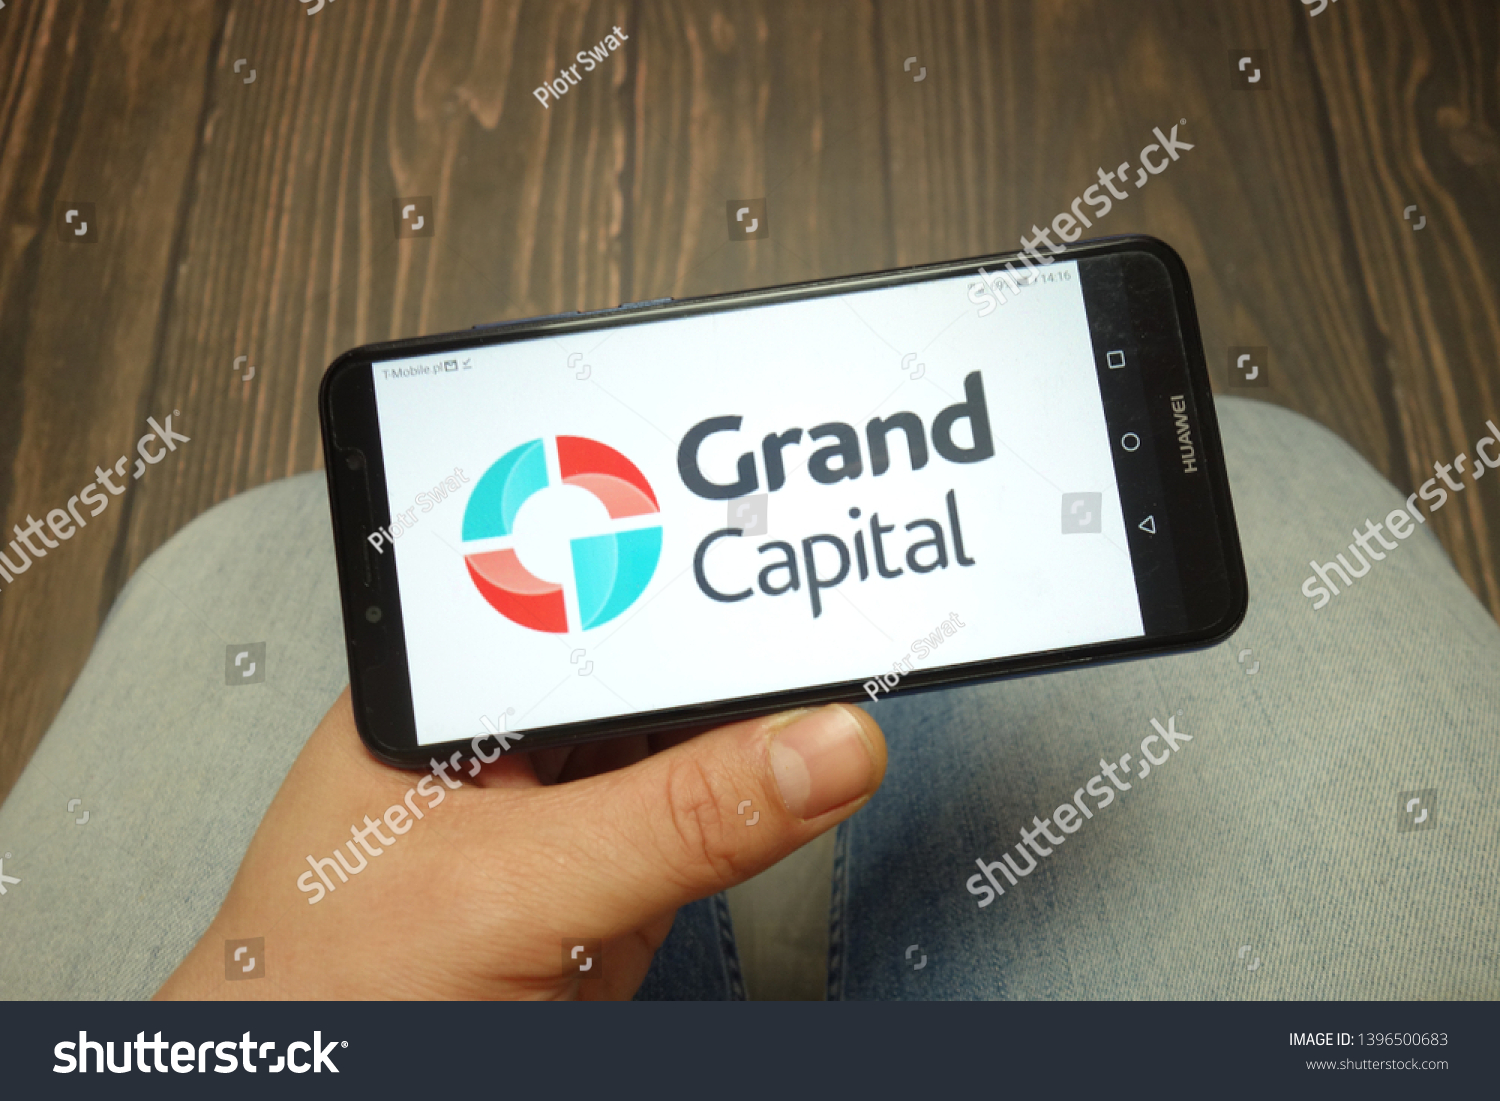 KONSKIE, POLAND - 05 MAY, 2019: Grand Capital company logo displayed on Huawei smartphone #1396500683